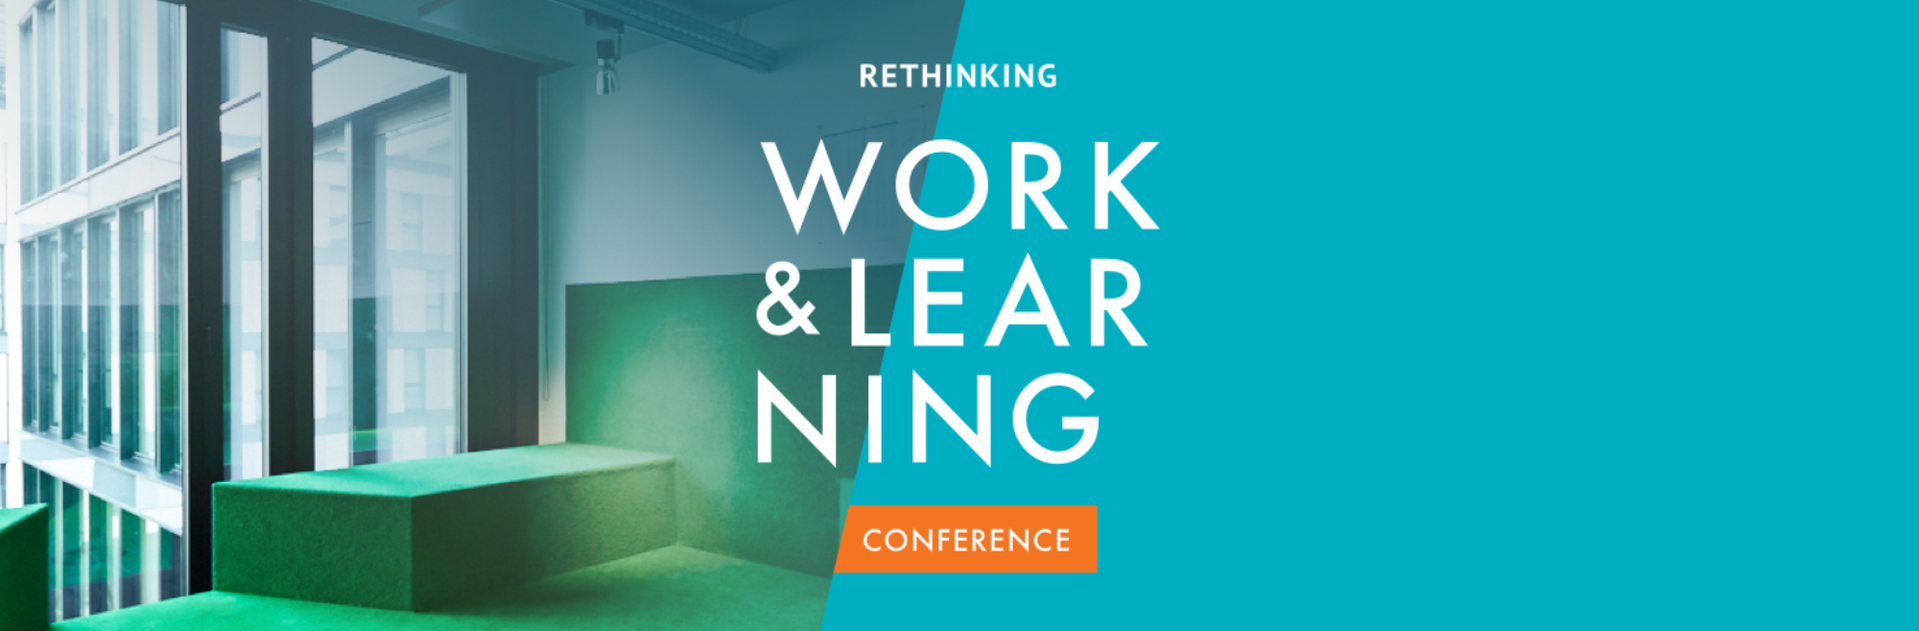 Impressionen zur Rethinking Work & Learning Conference